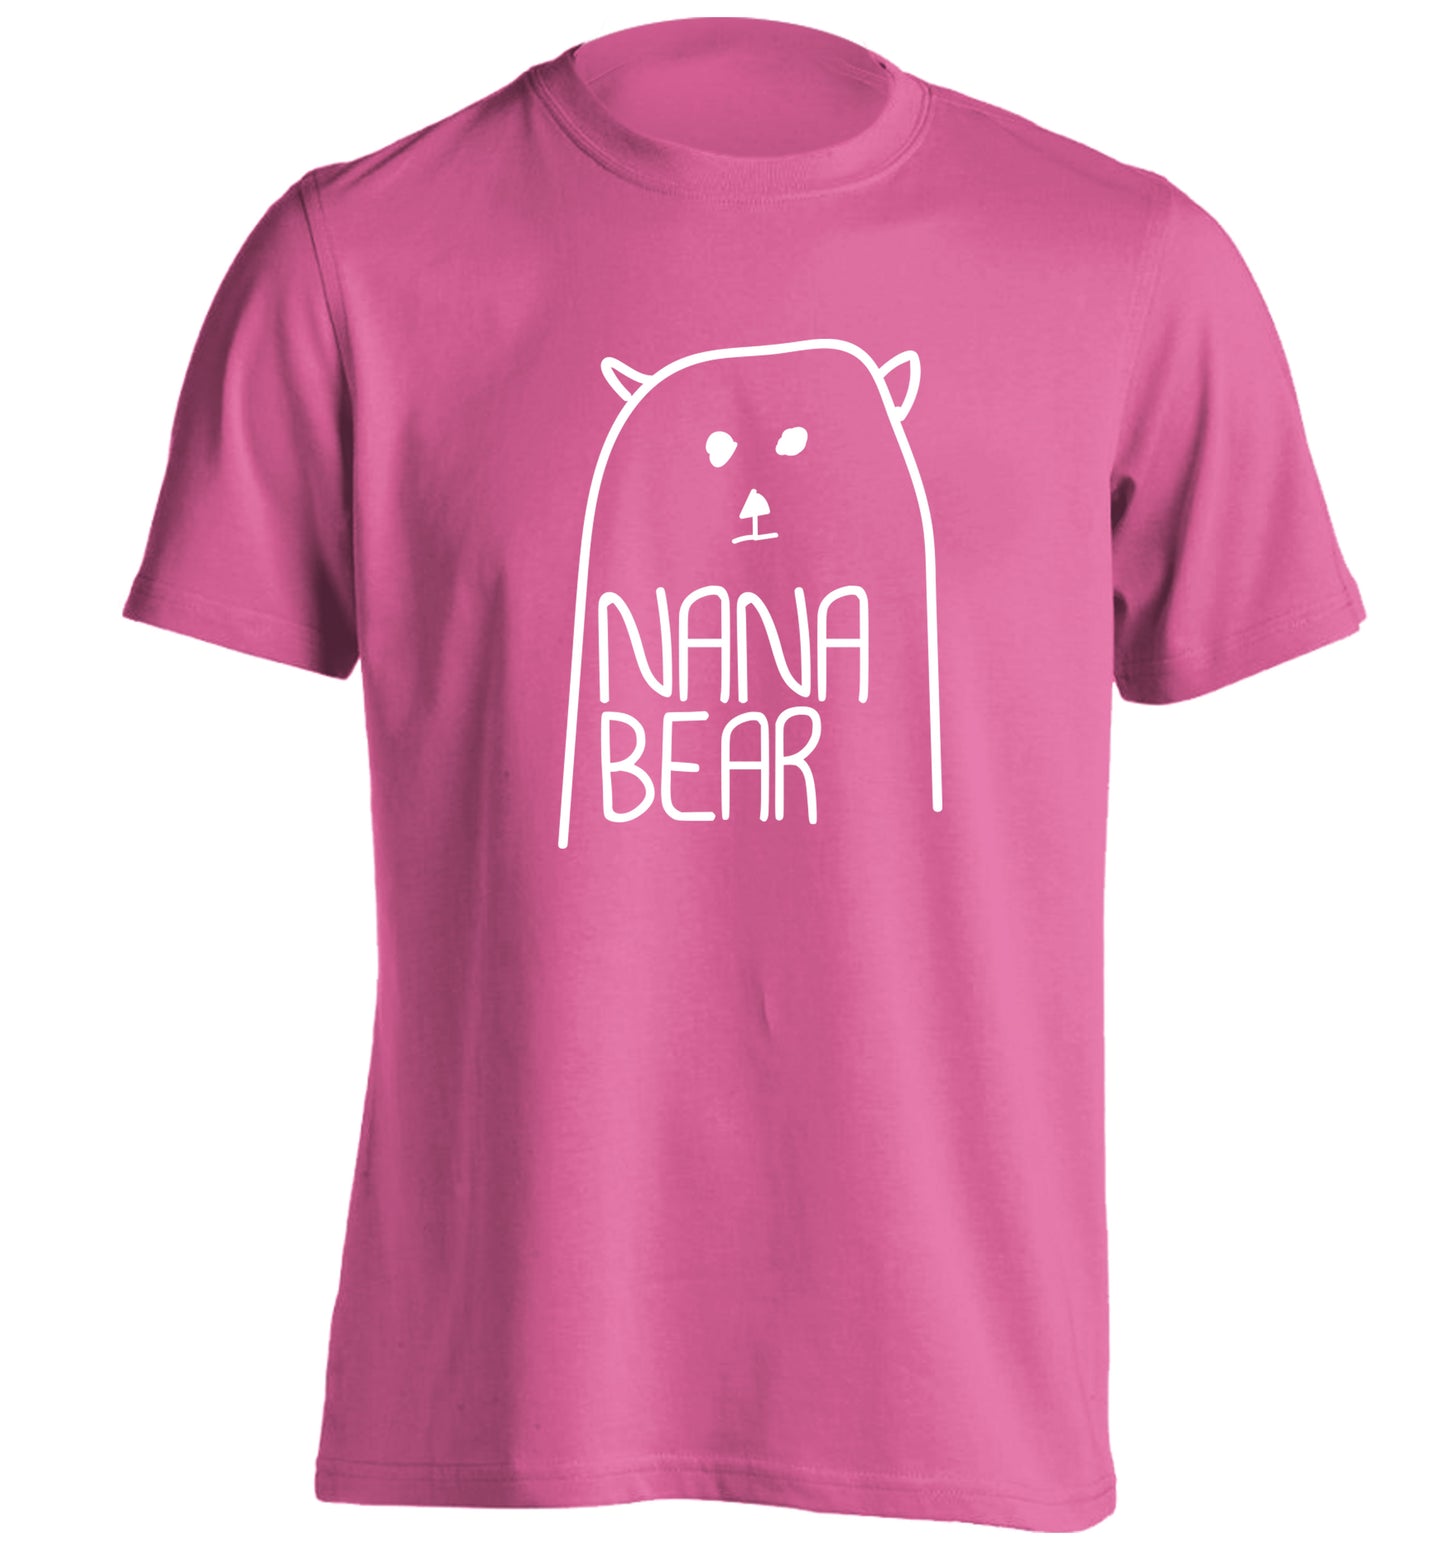 Nana bear adults unisex pink Tshirt 2XL